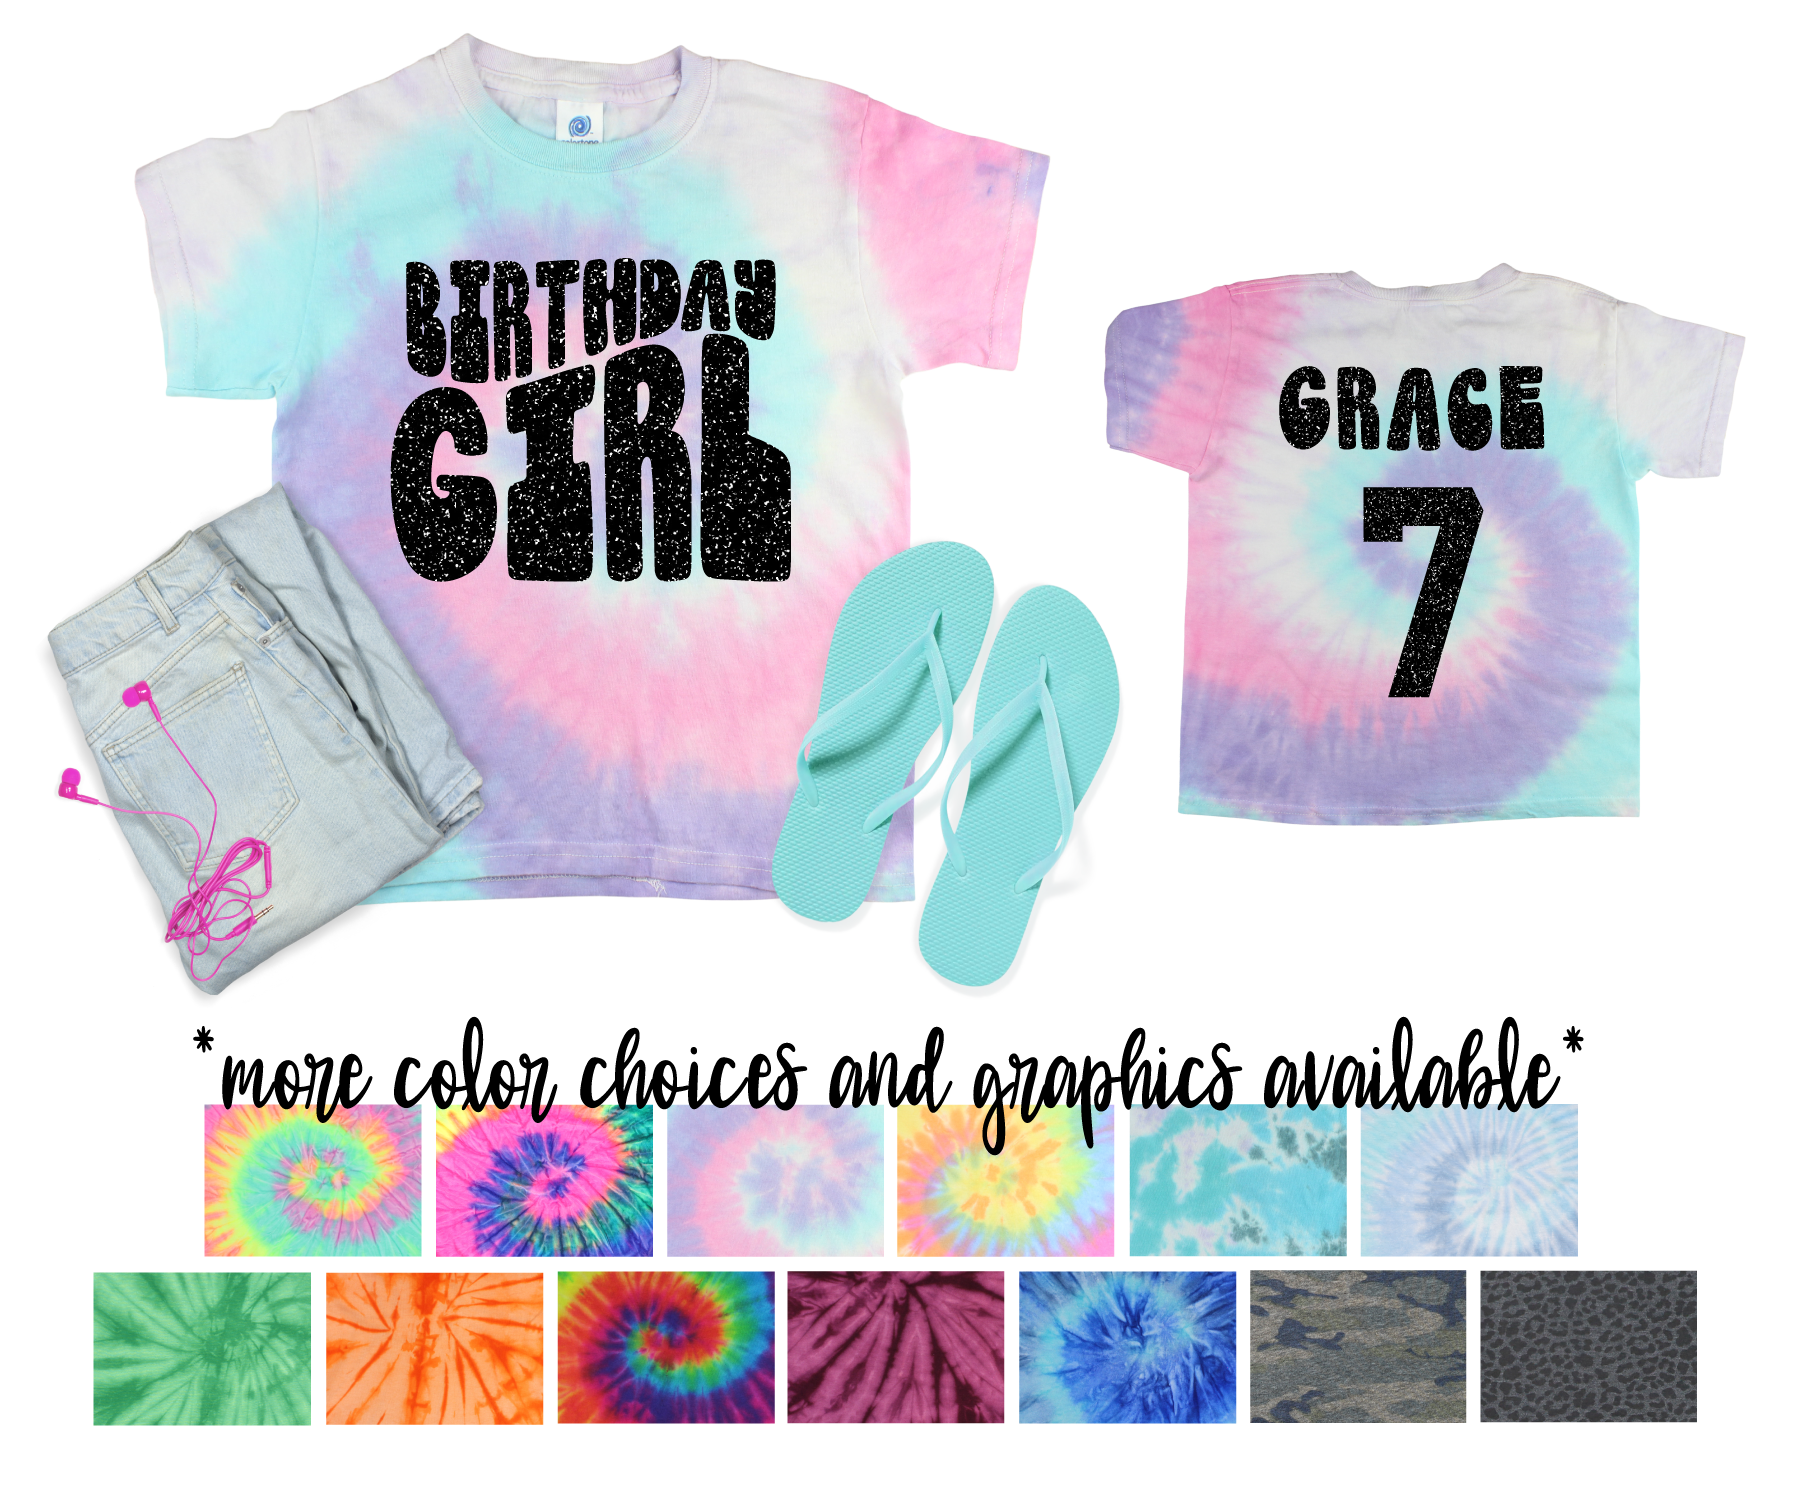 Personalized Birthday Girl Shirt